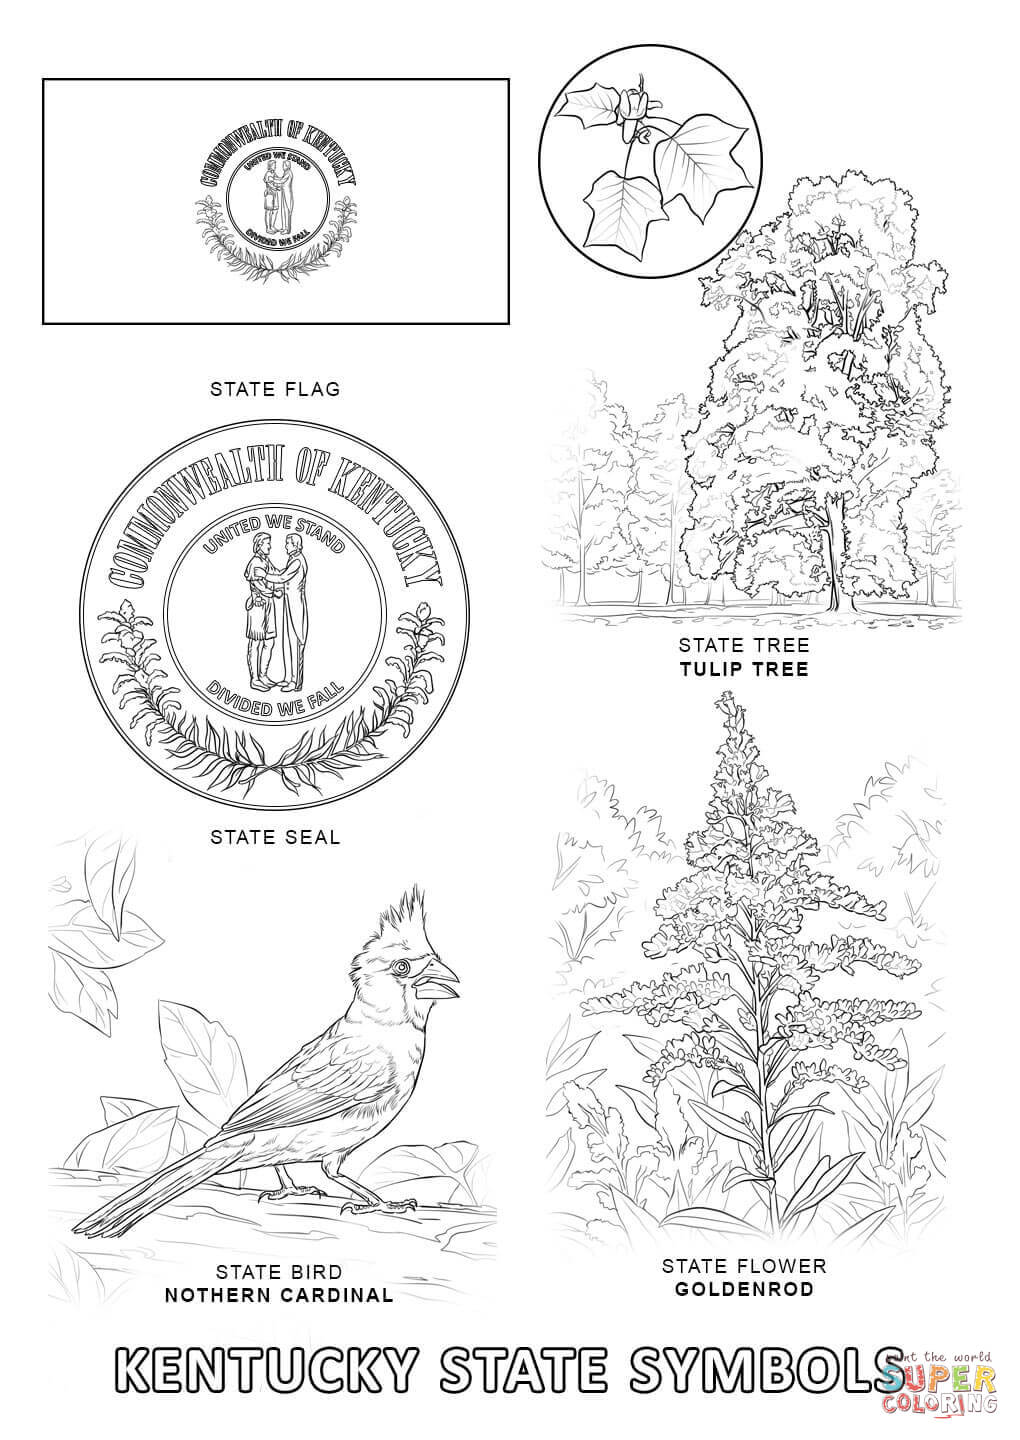 alaska state tree coloring page